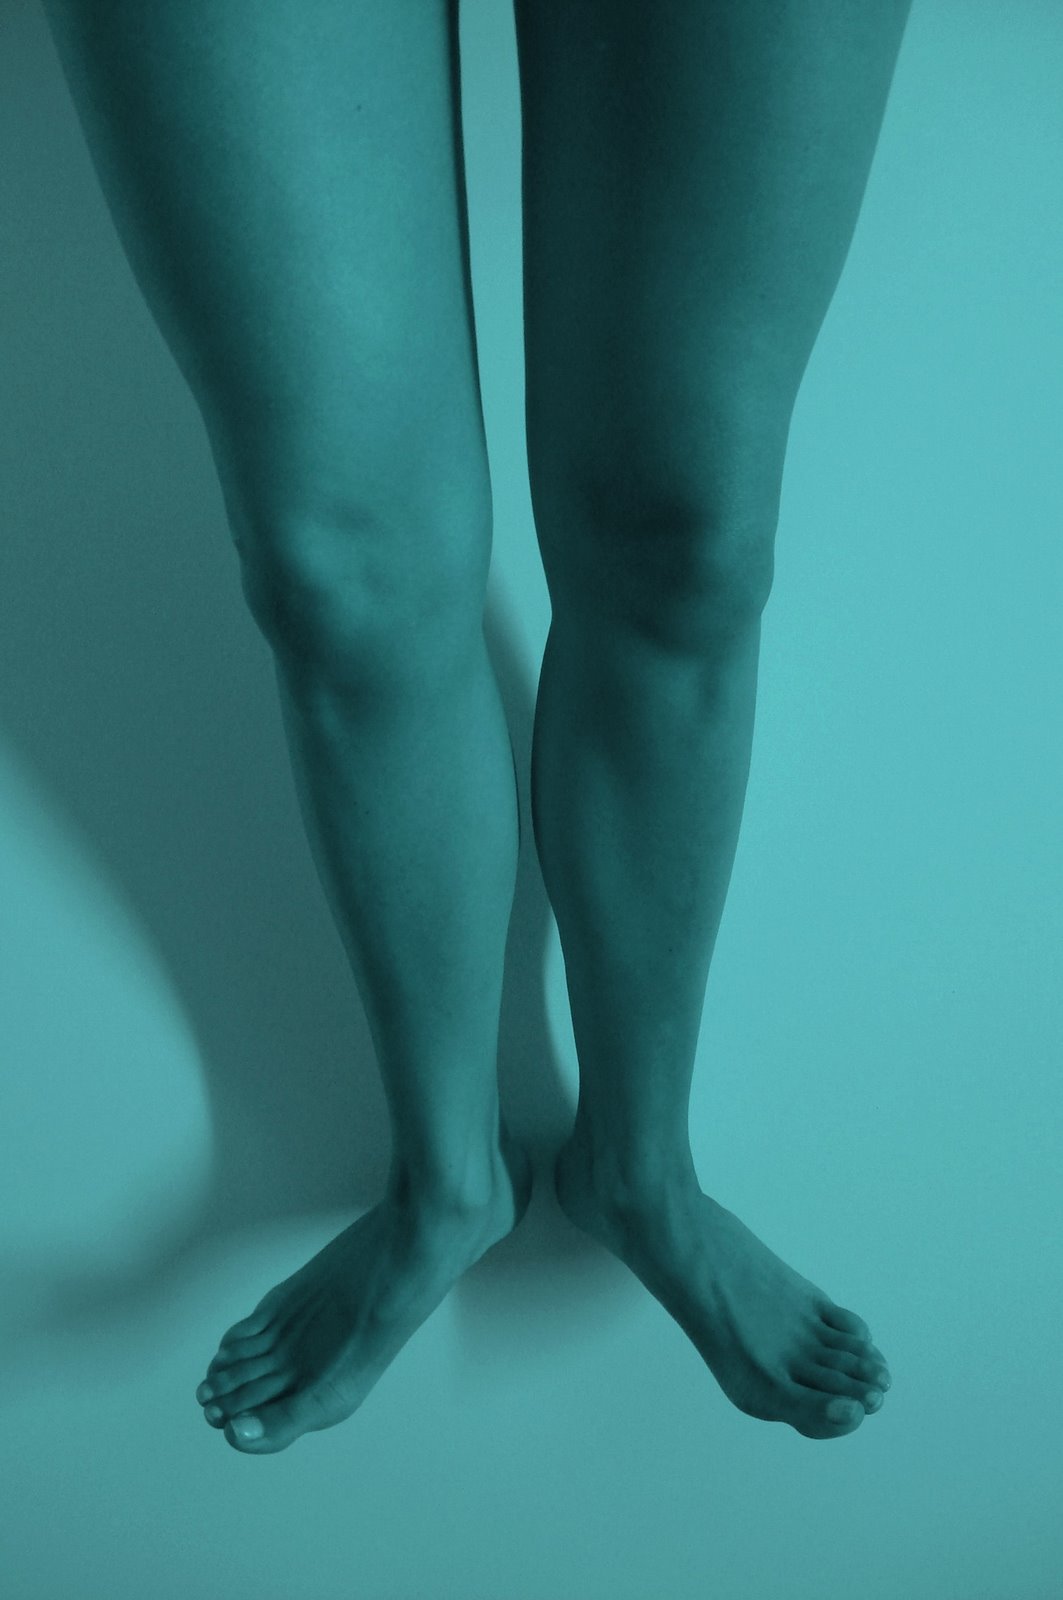 [Blue+legs.jpg]